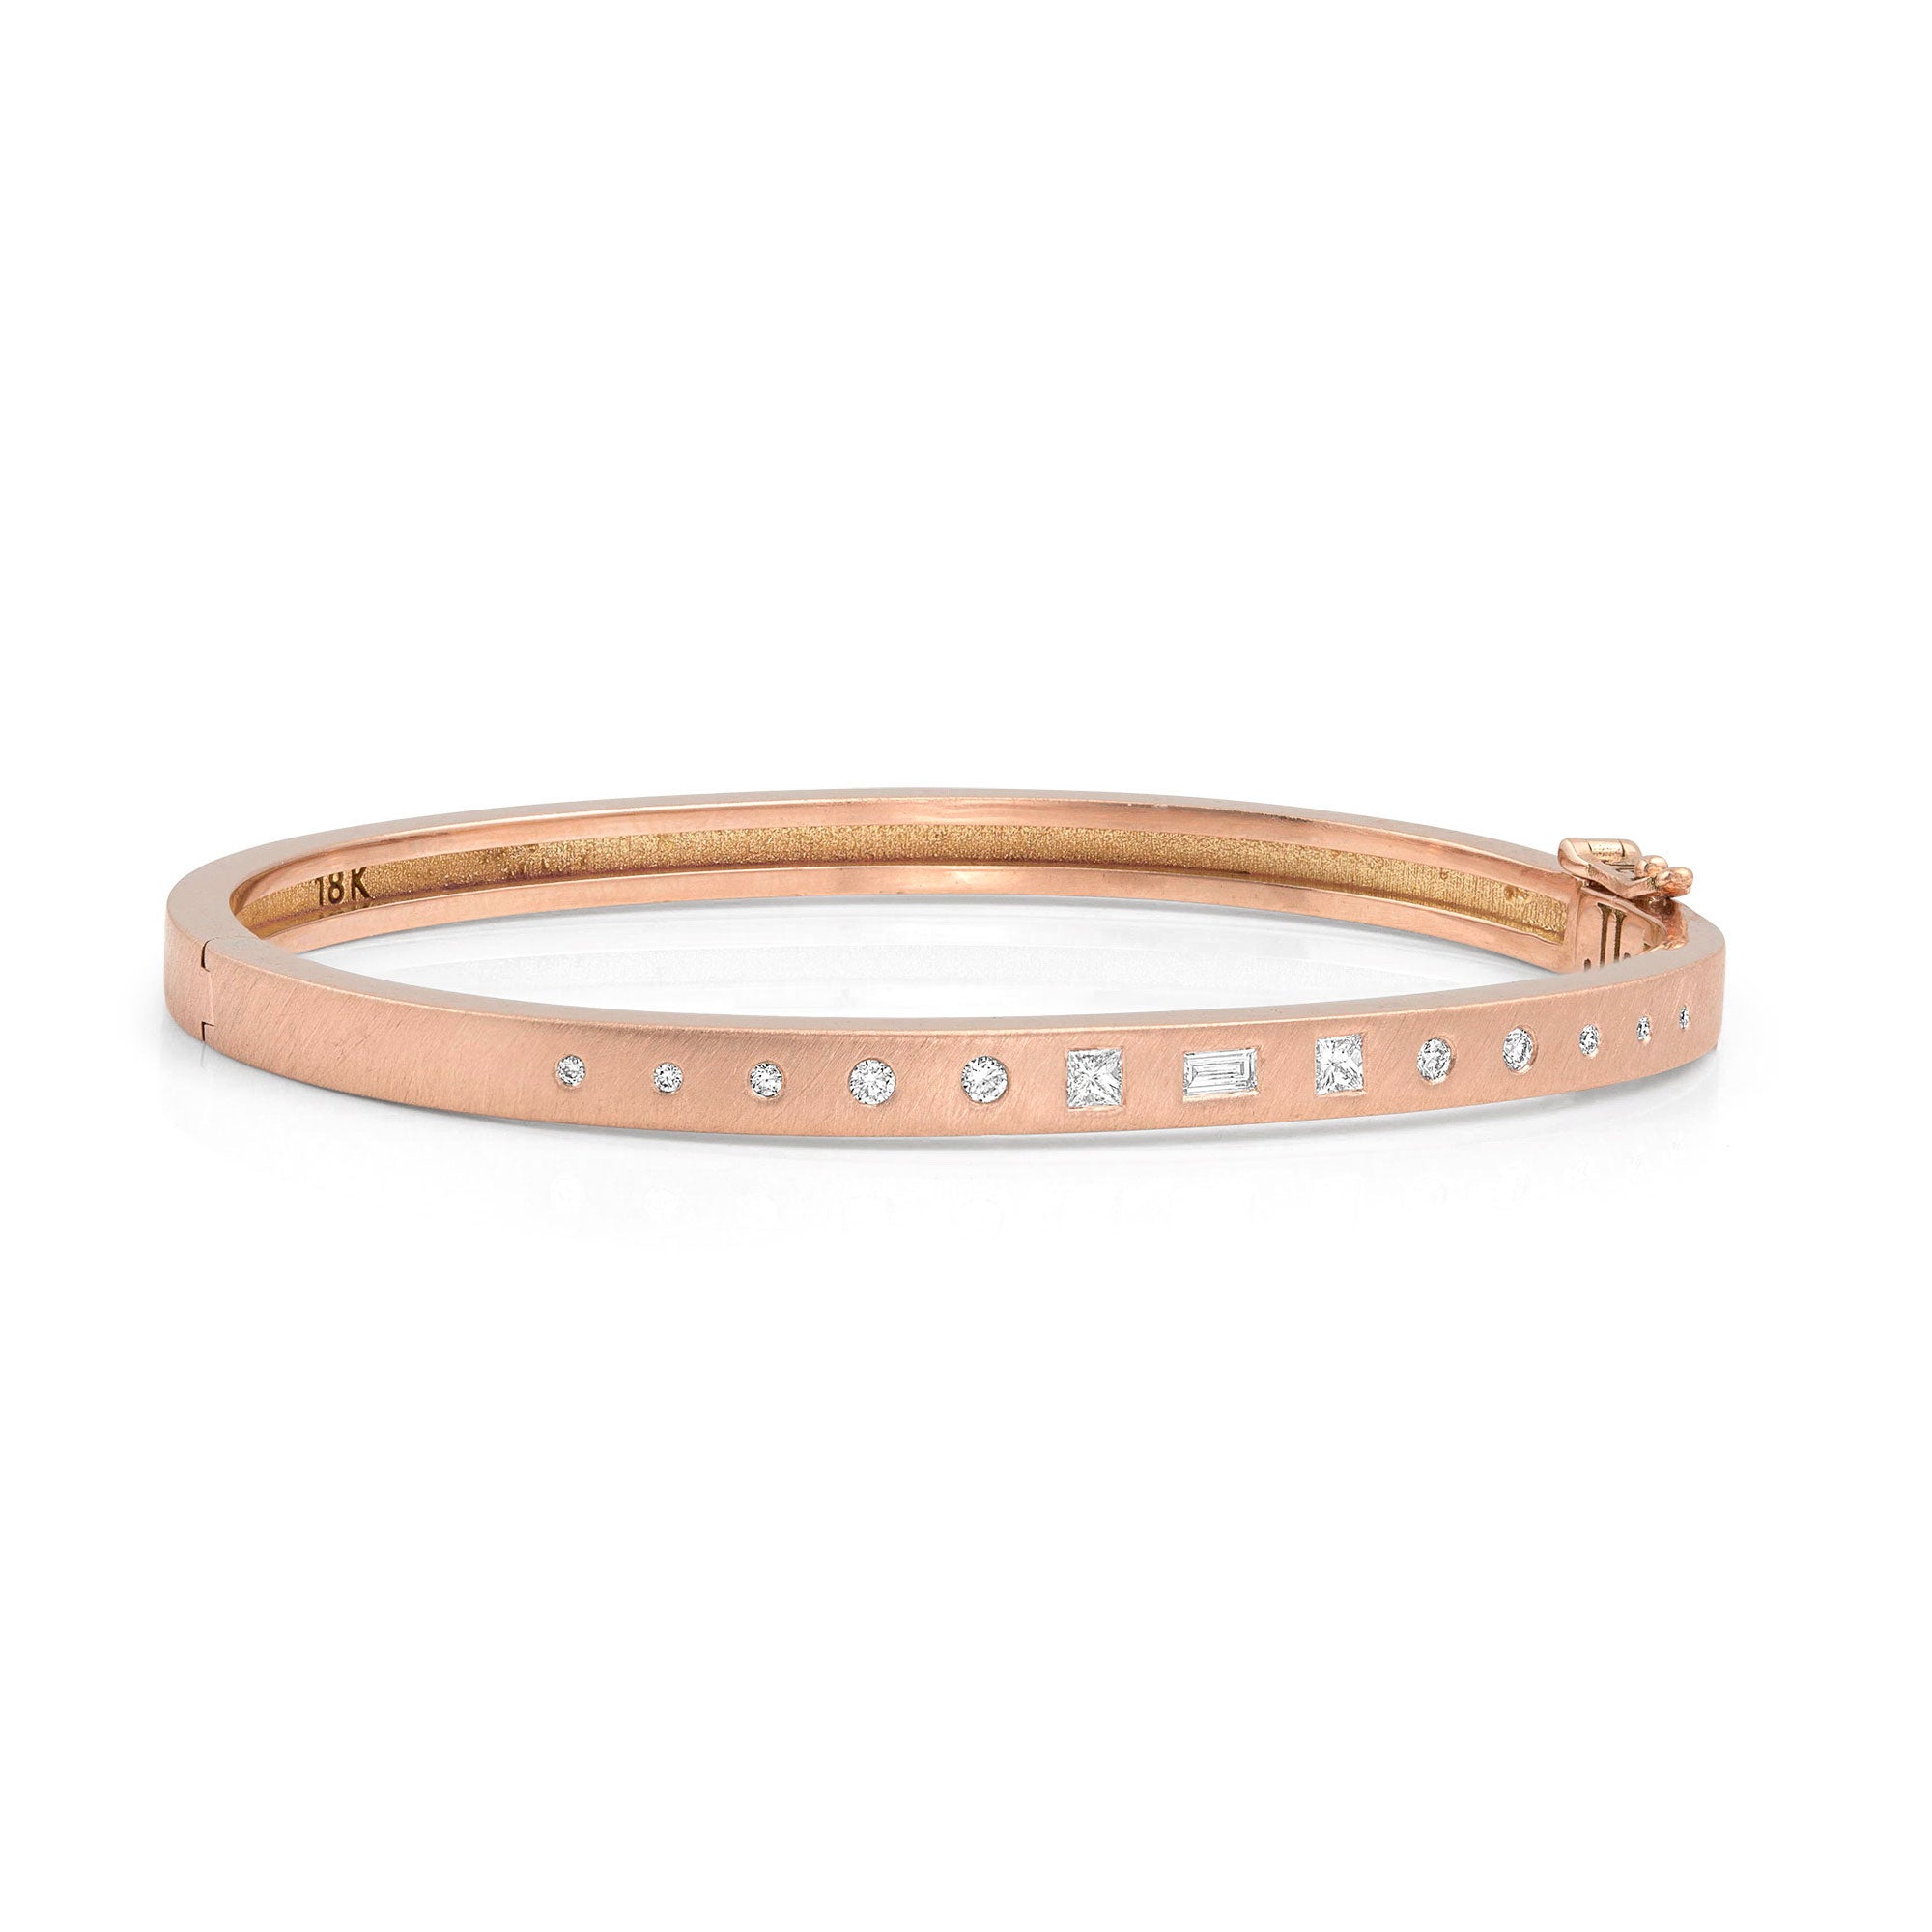 18k rose gold TUXX hinged cuff bracelet with mixed white diamonds